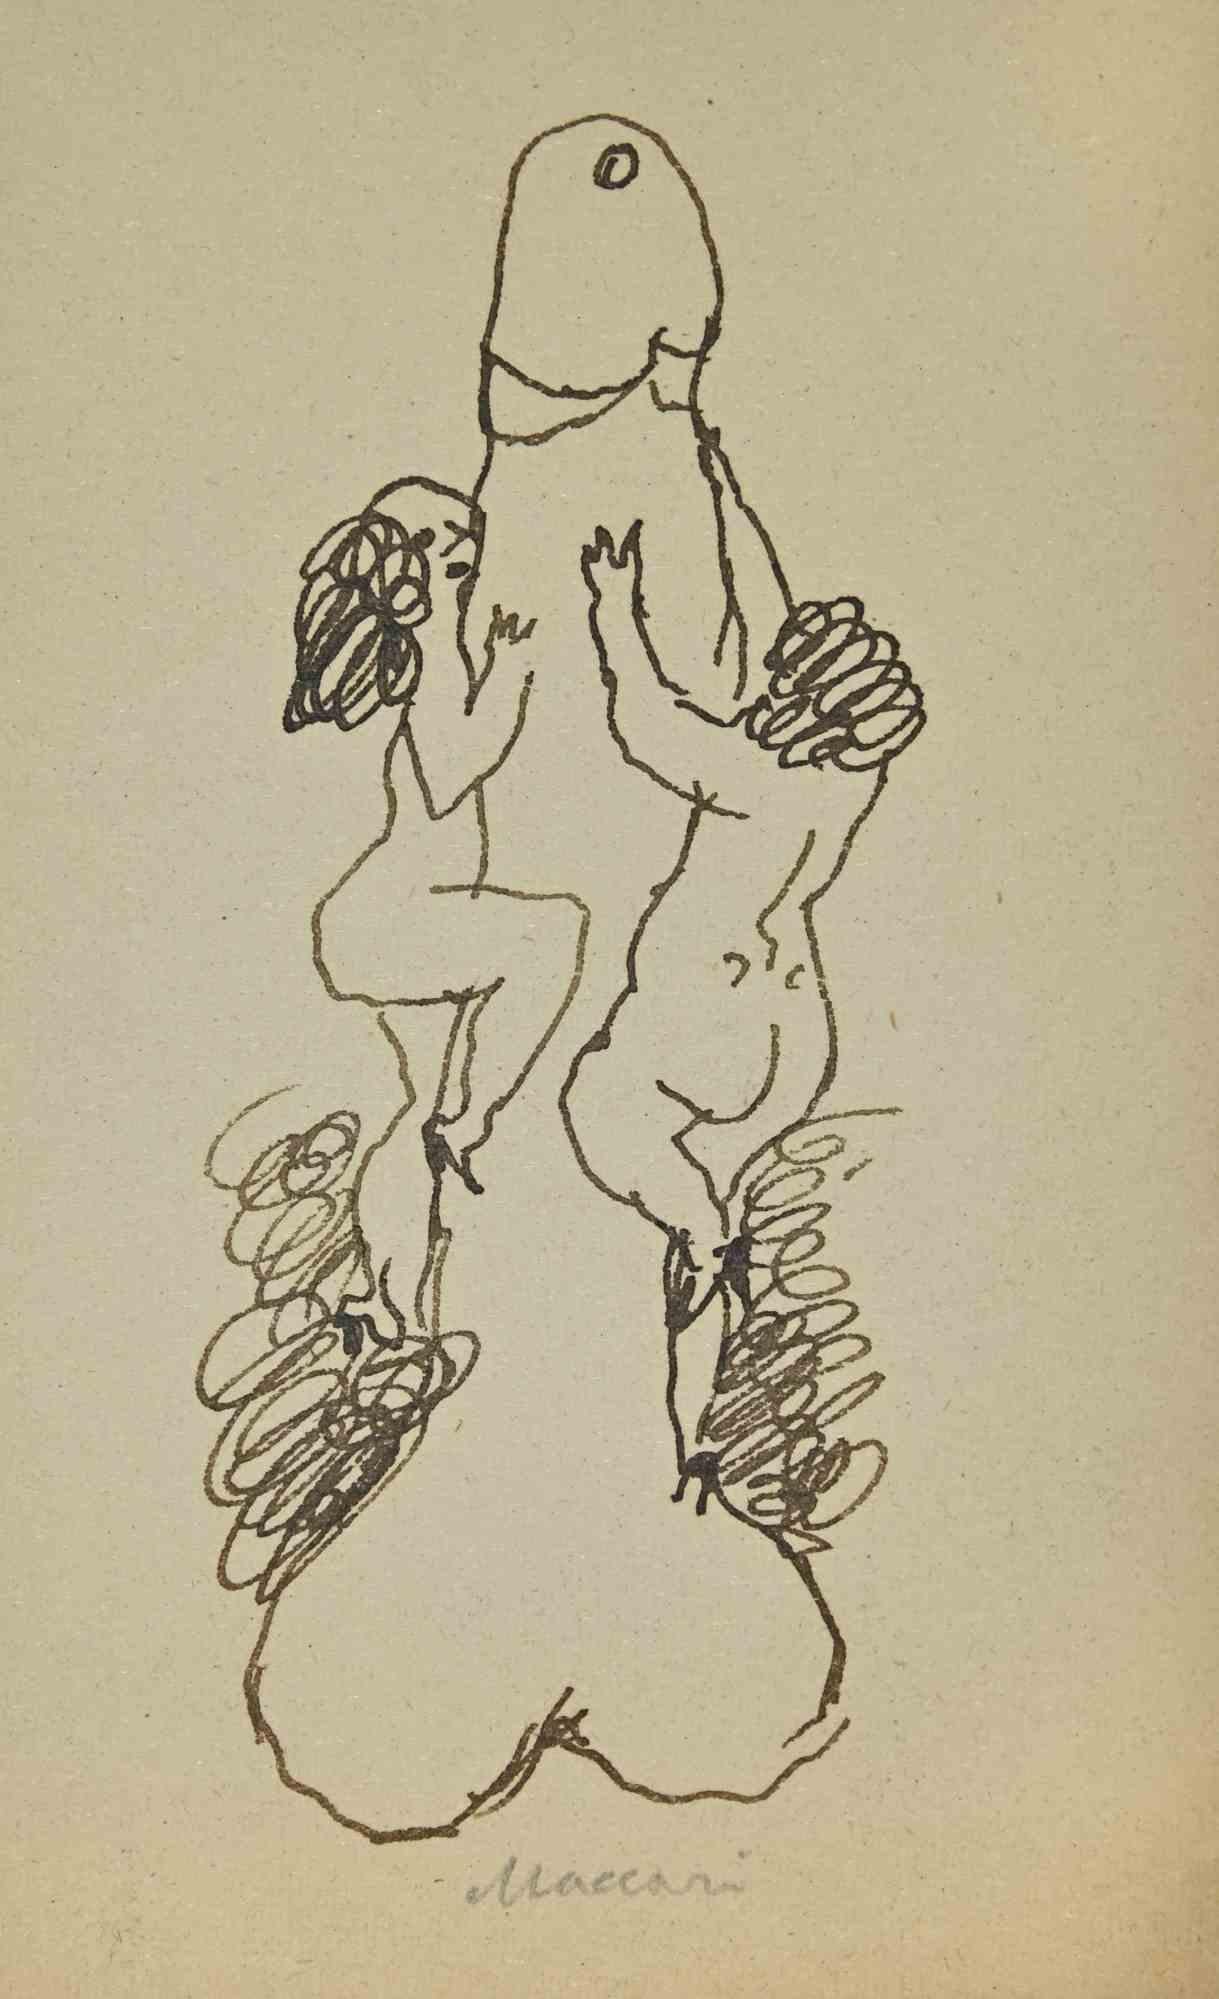 The Climbers - Drawing by Mino Maccari - 1960 ca